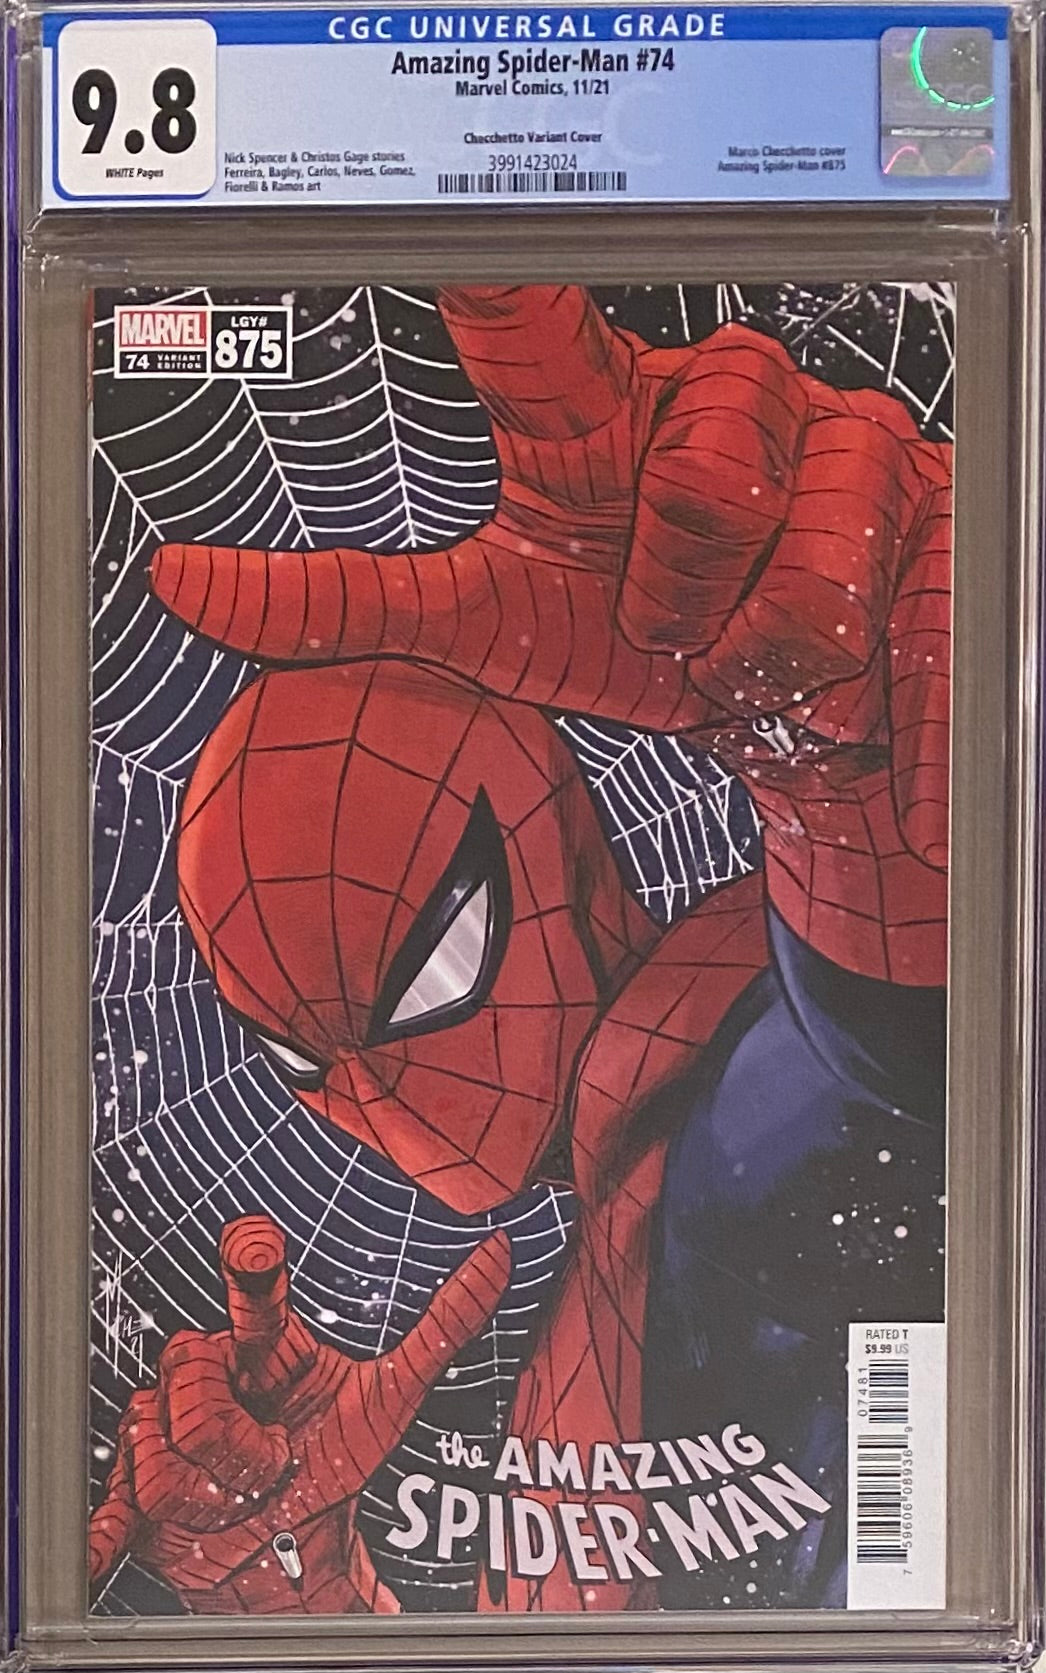 Amazing Spider-Man #74 (#875) Checchetto Variant CGC 9.8